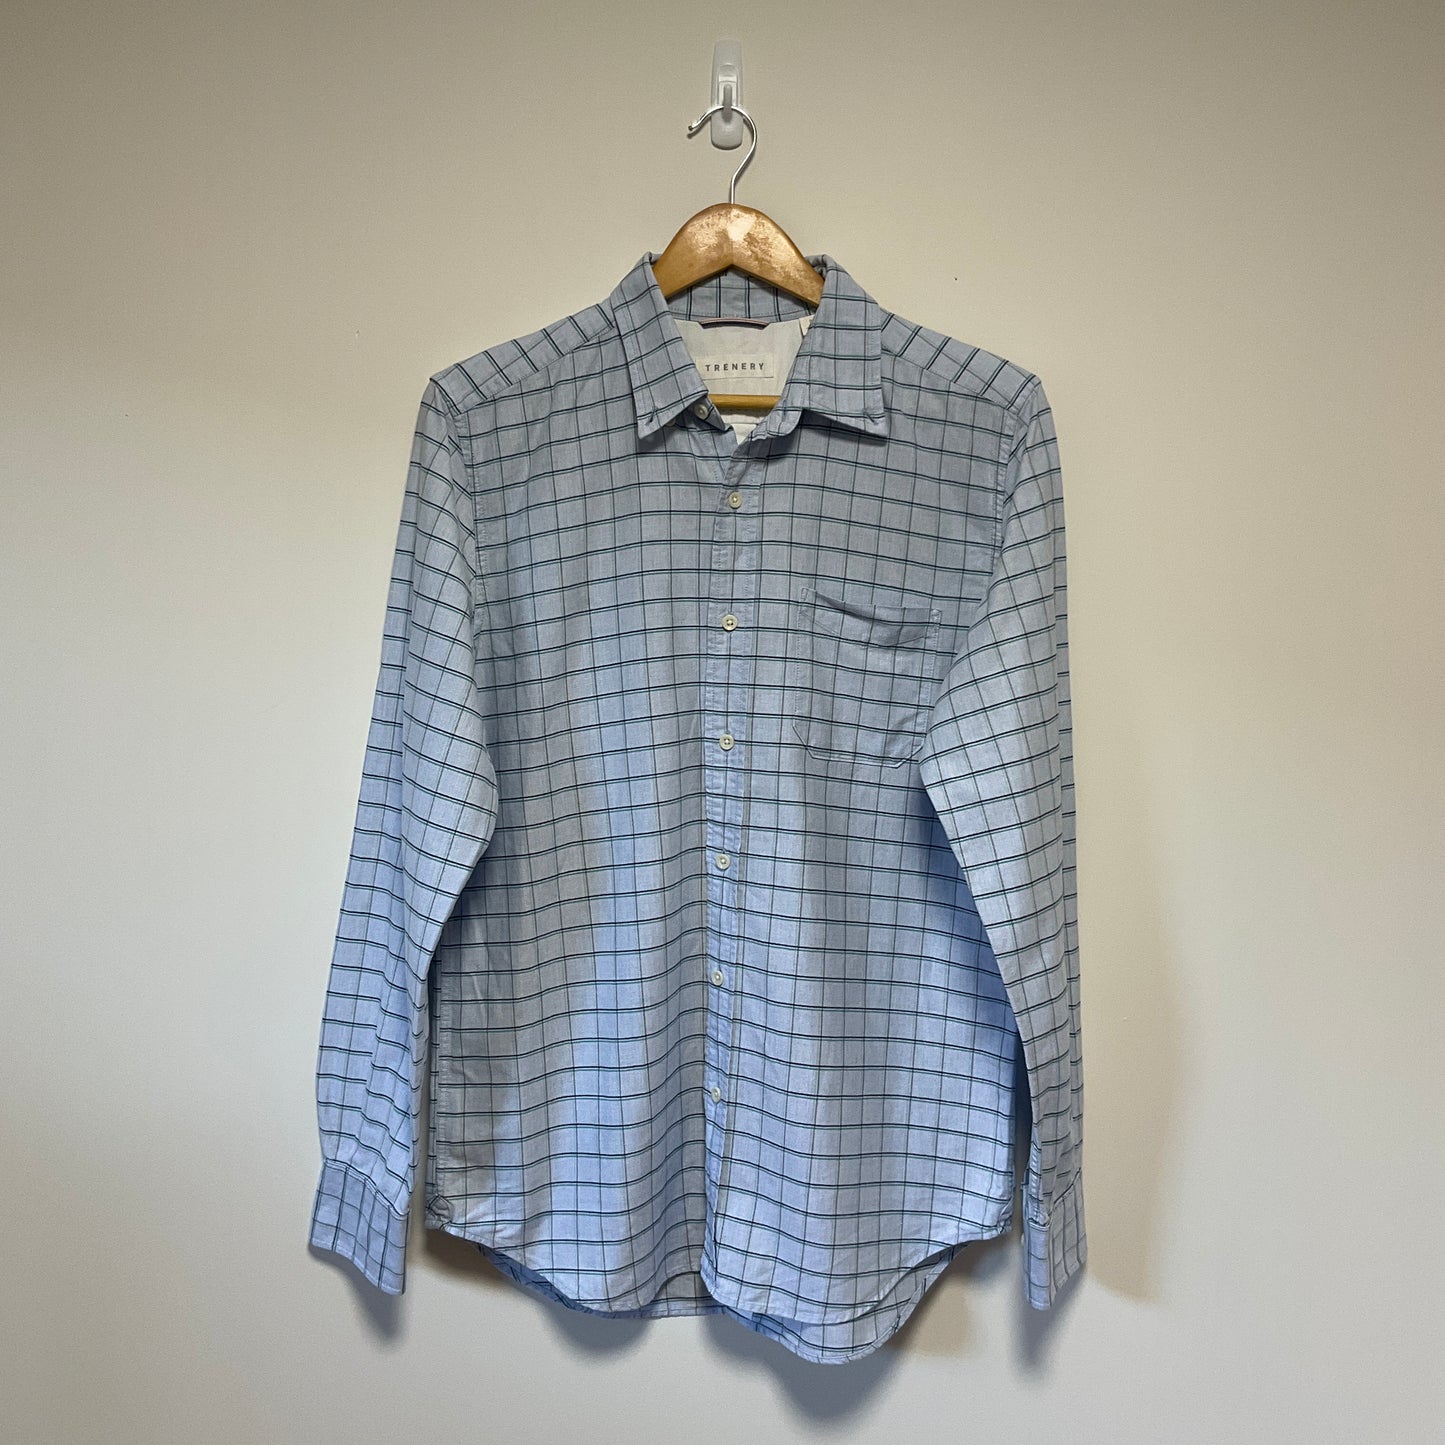 Trenery - Cotton Tailored Check Shirt